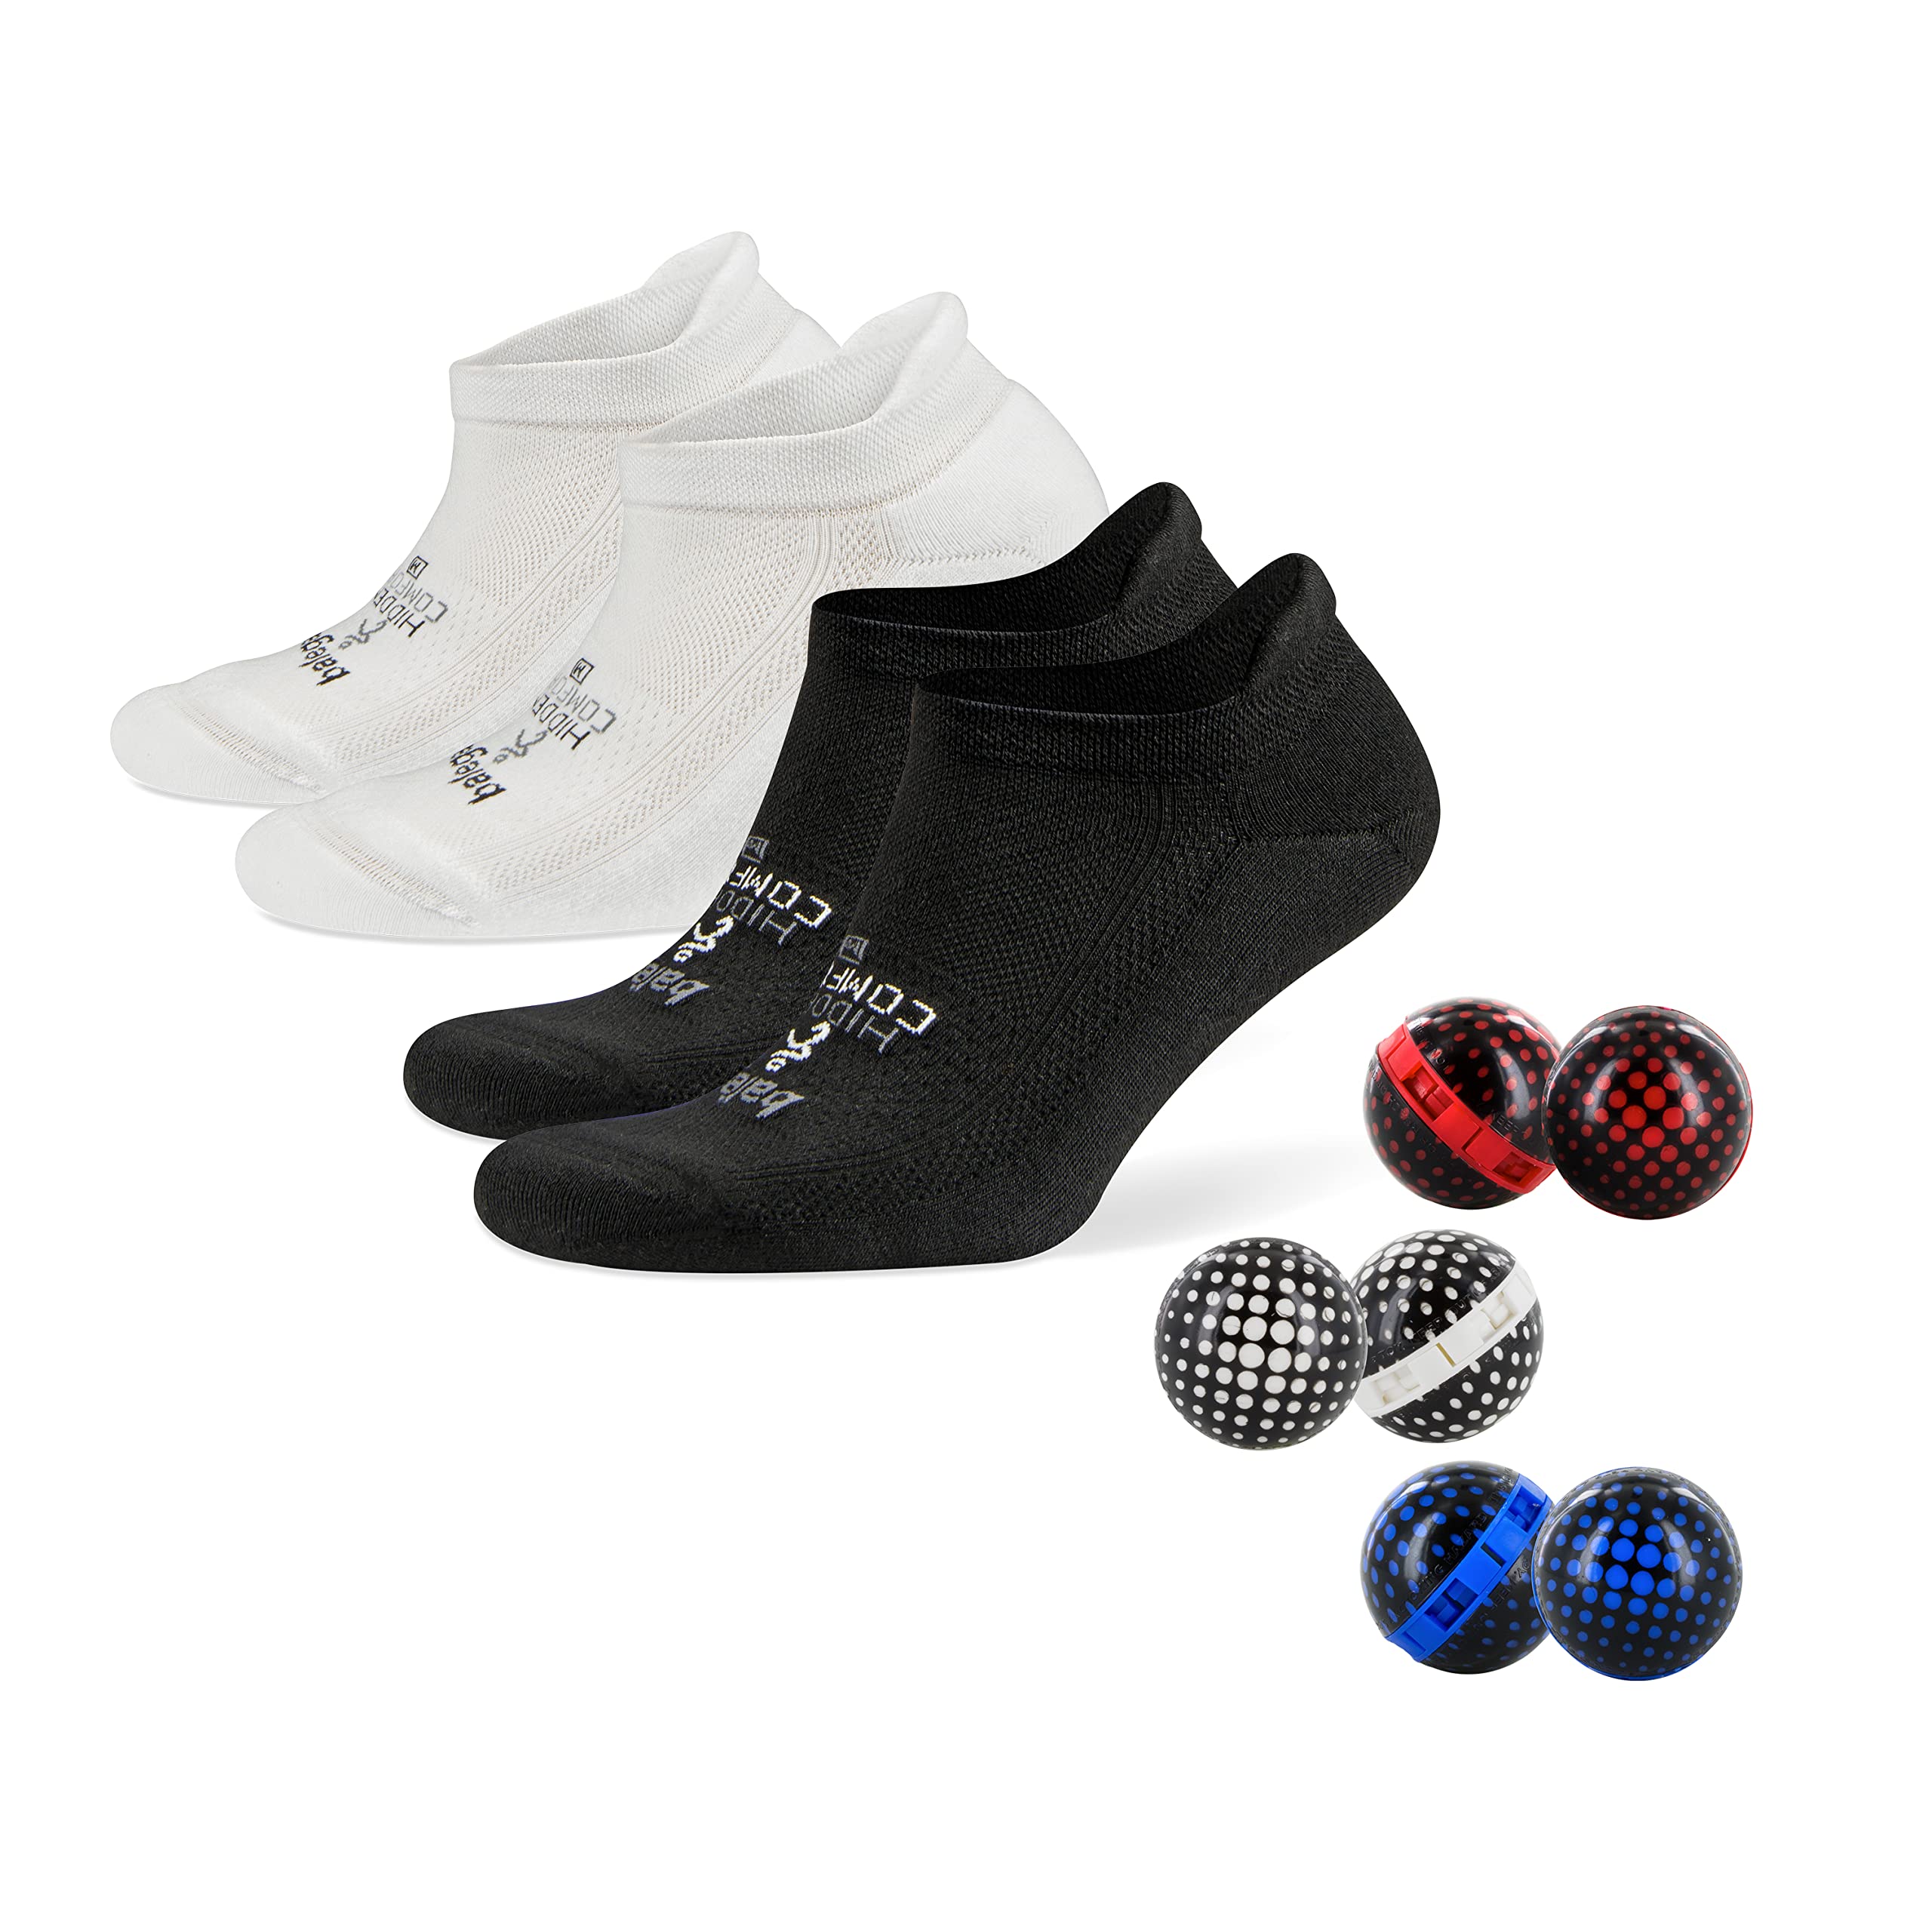 Balega Hidden Comfort No-show, Heel Tab, Running Socks & Sneakerballs for Men and Women (2 Pairs Socks + 6 Sneakerballs)